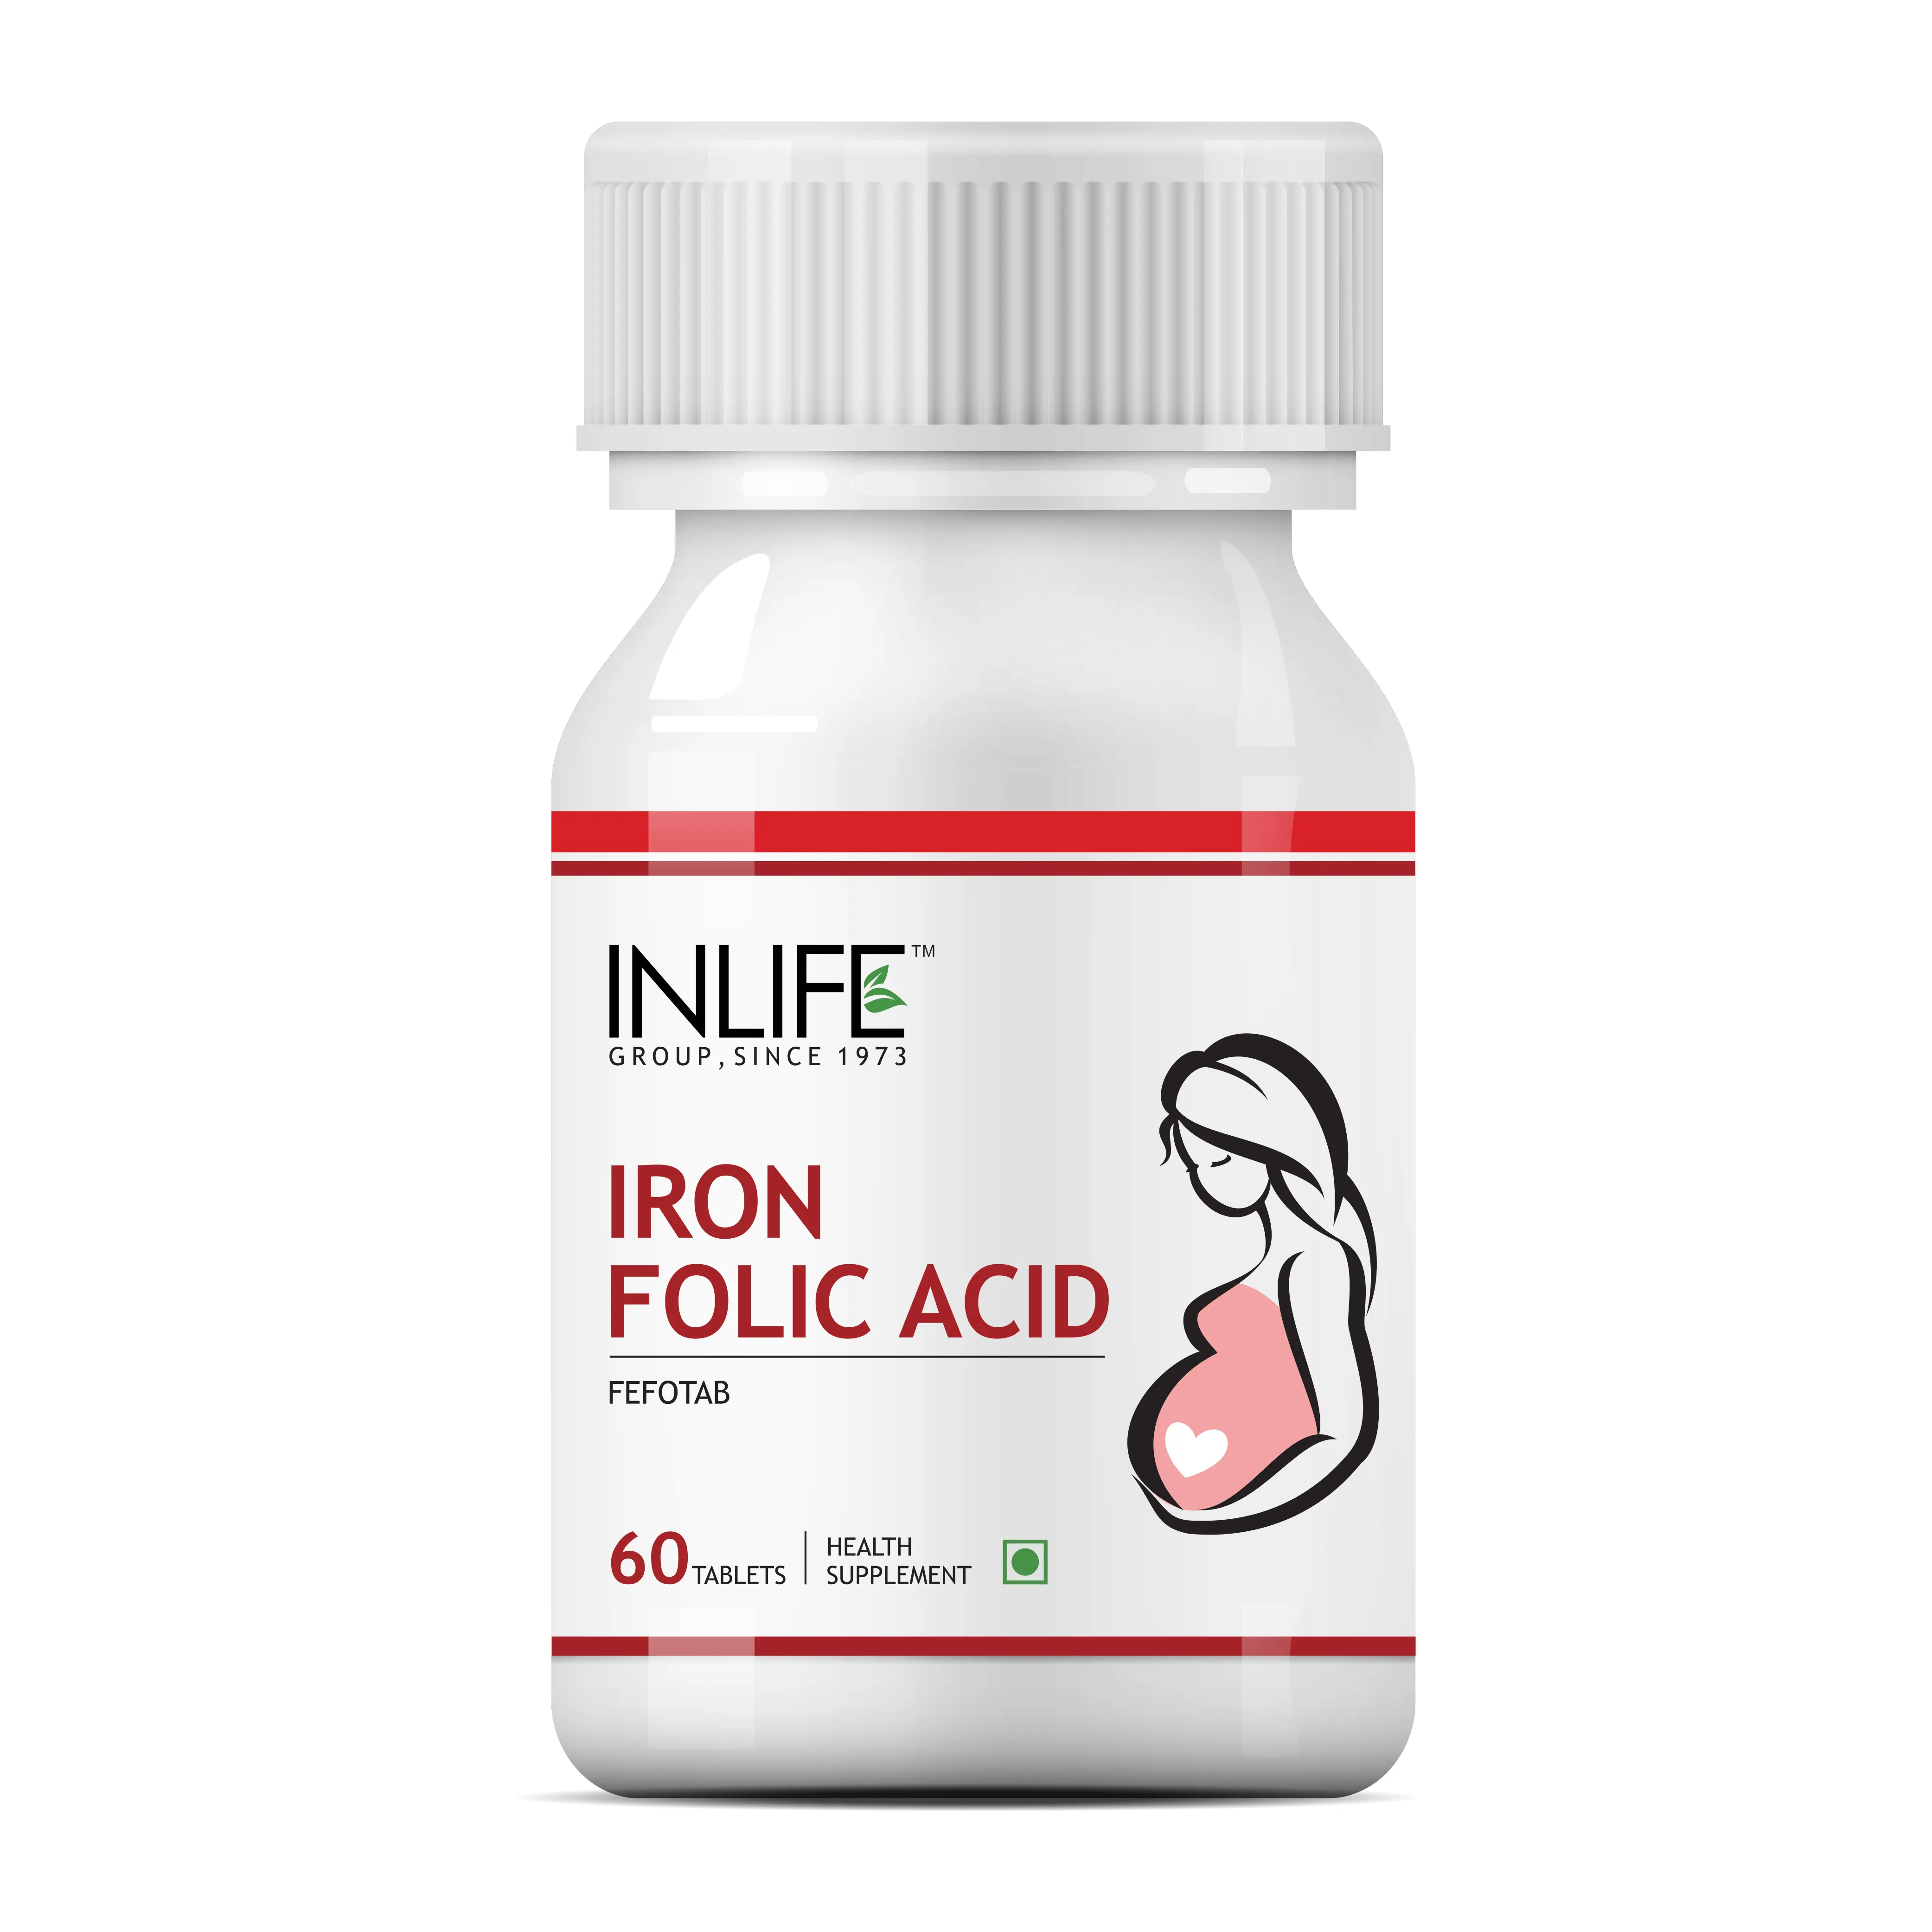 Iron Folic Acid Tablets - Ferrous Ascorbate (Iron) GMP Certified Manufacturing Unit